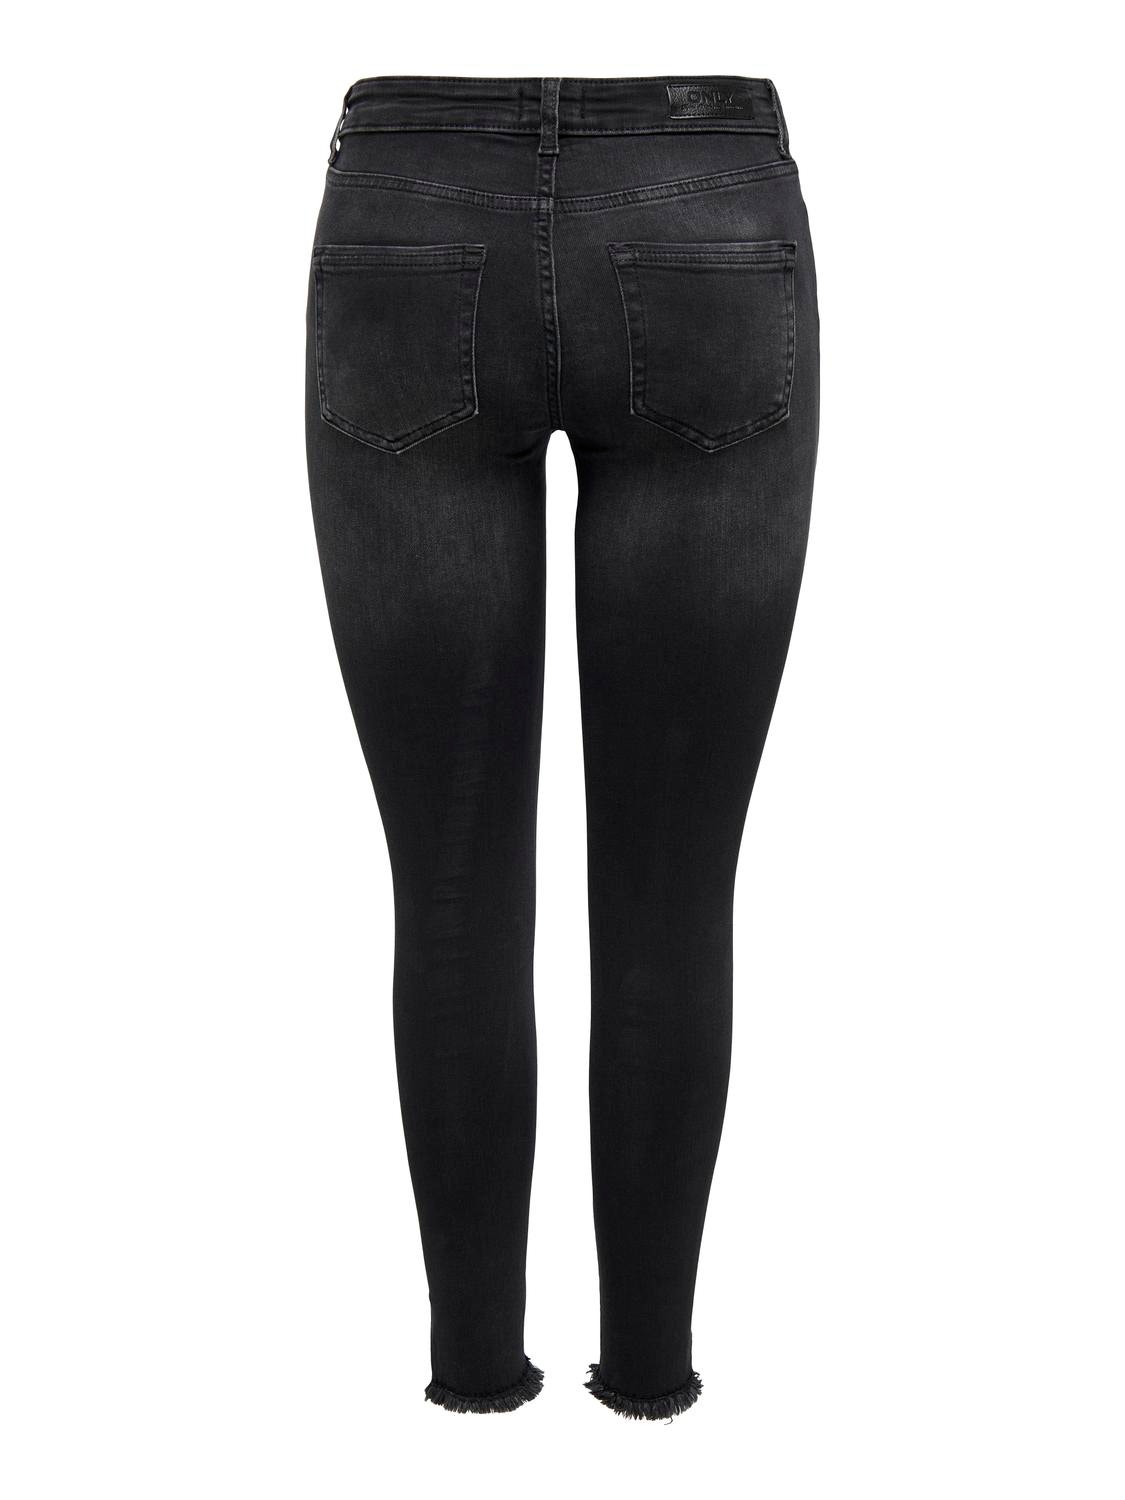 ONLY onlblush mid waist ankle raw jeans -Black Denim - 15157997